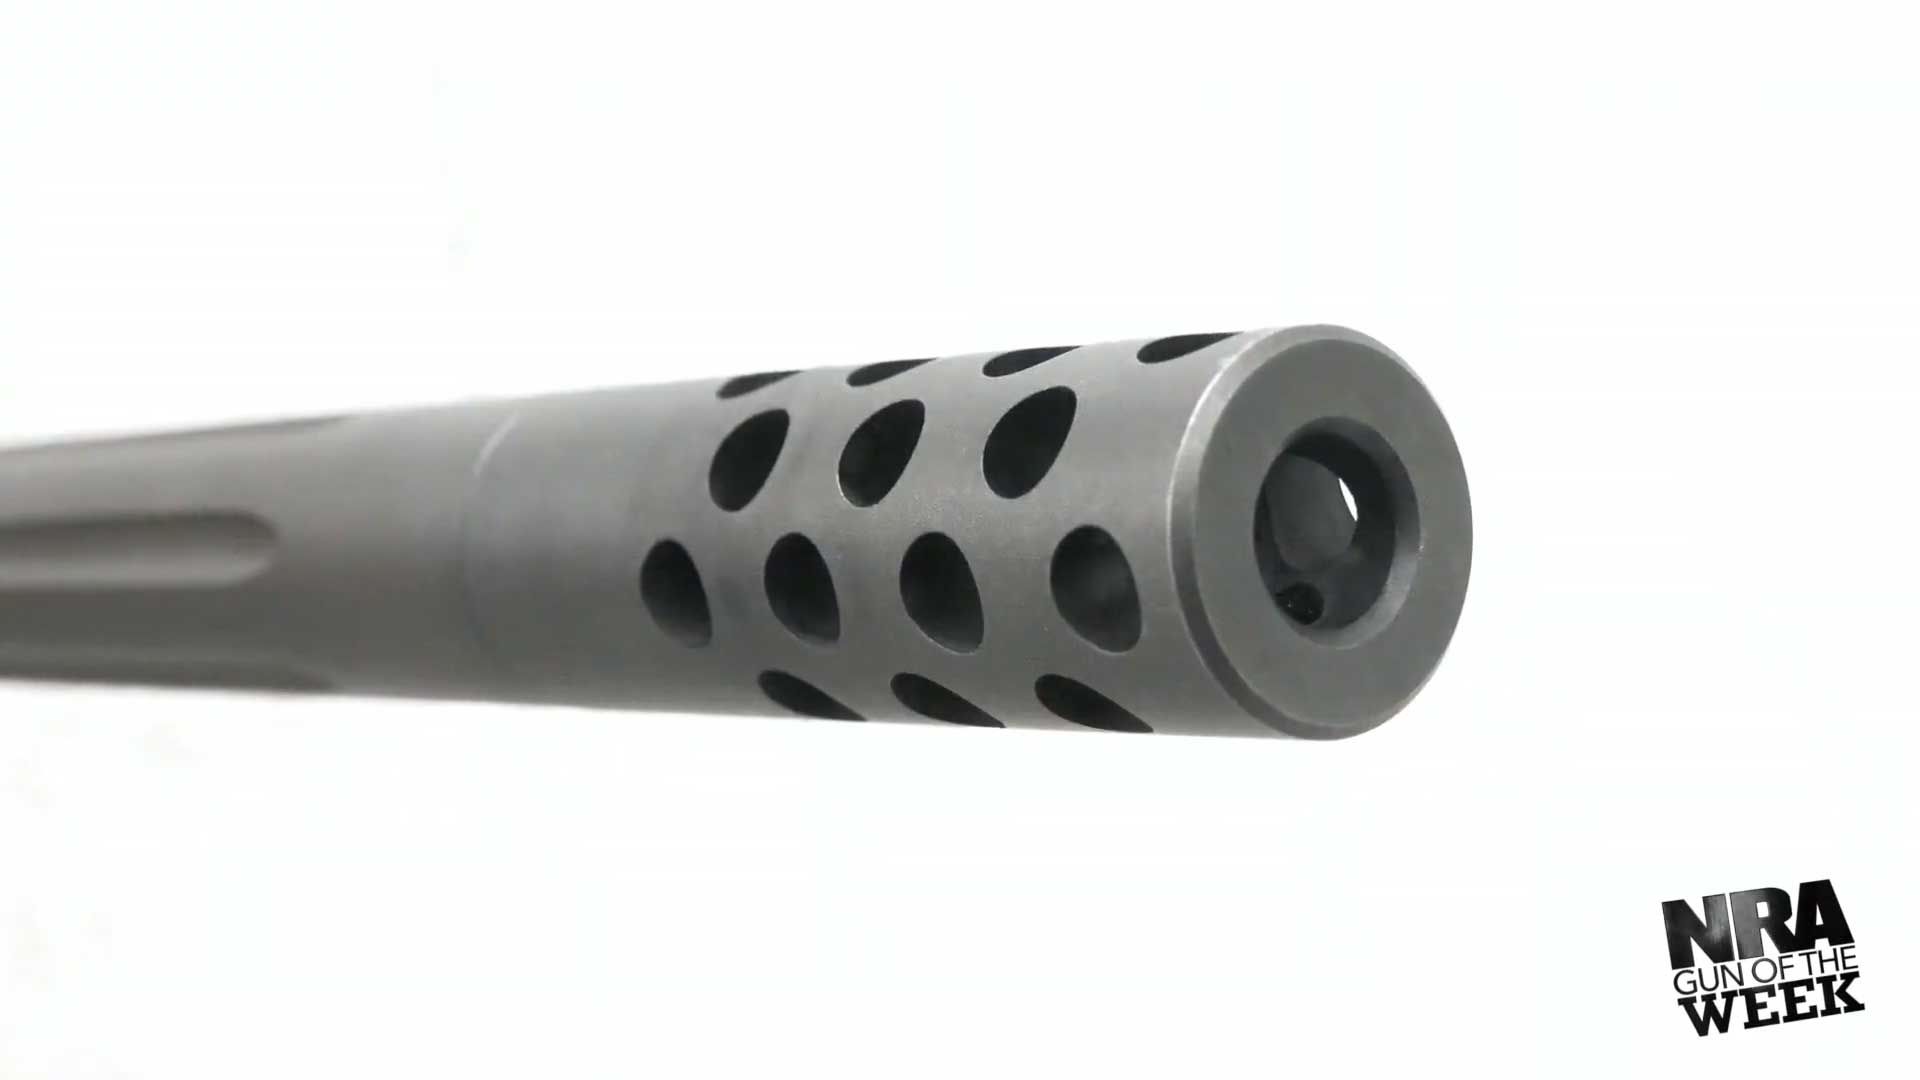 metal steel cylinder rifle barrel gun holes round NRA GUN OF THE WEEK text on image